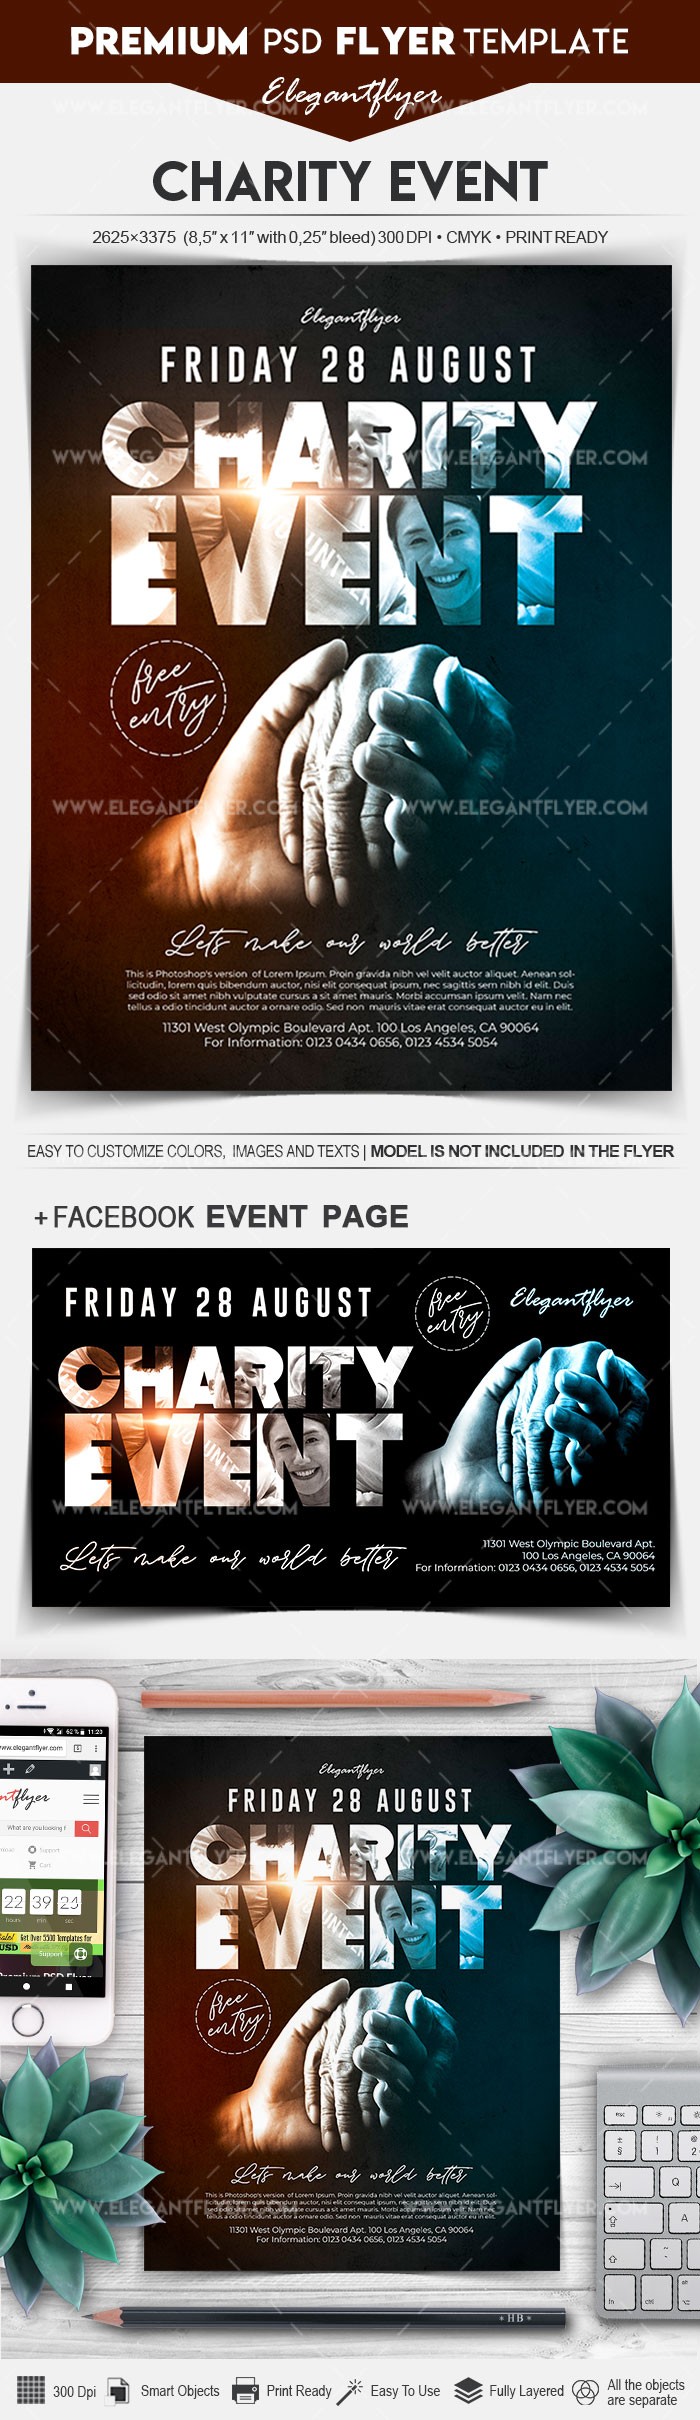 Charity Event by ElegantFlyer